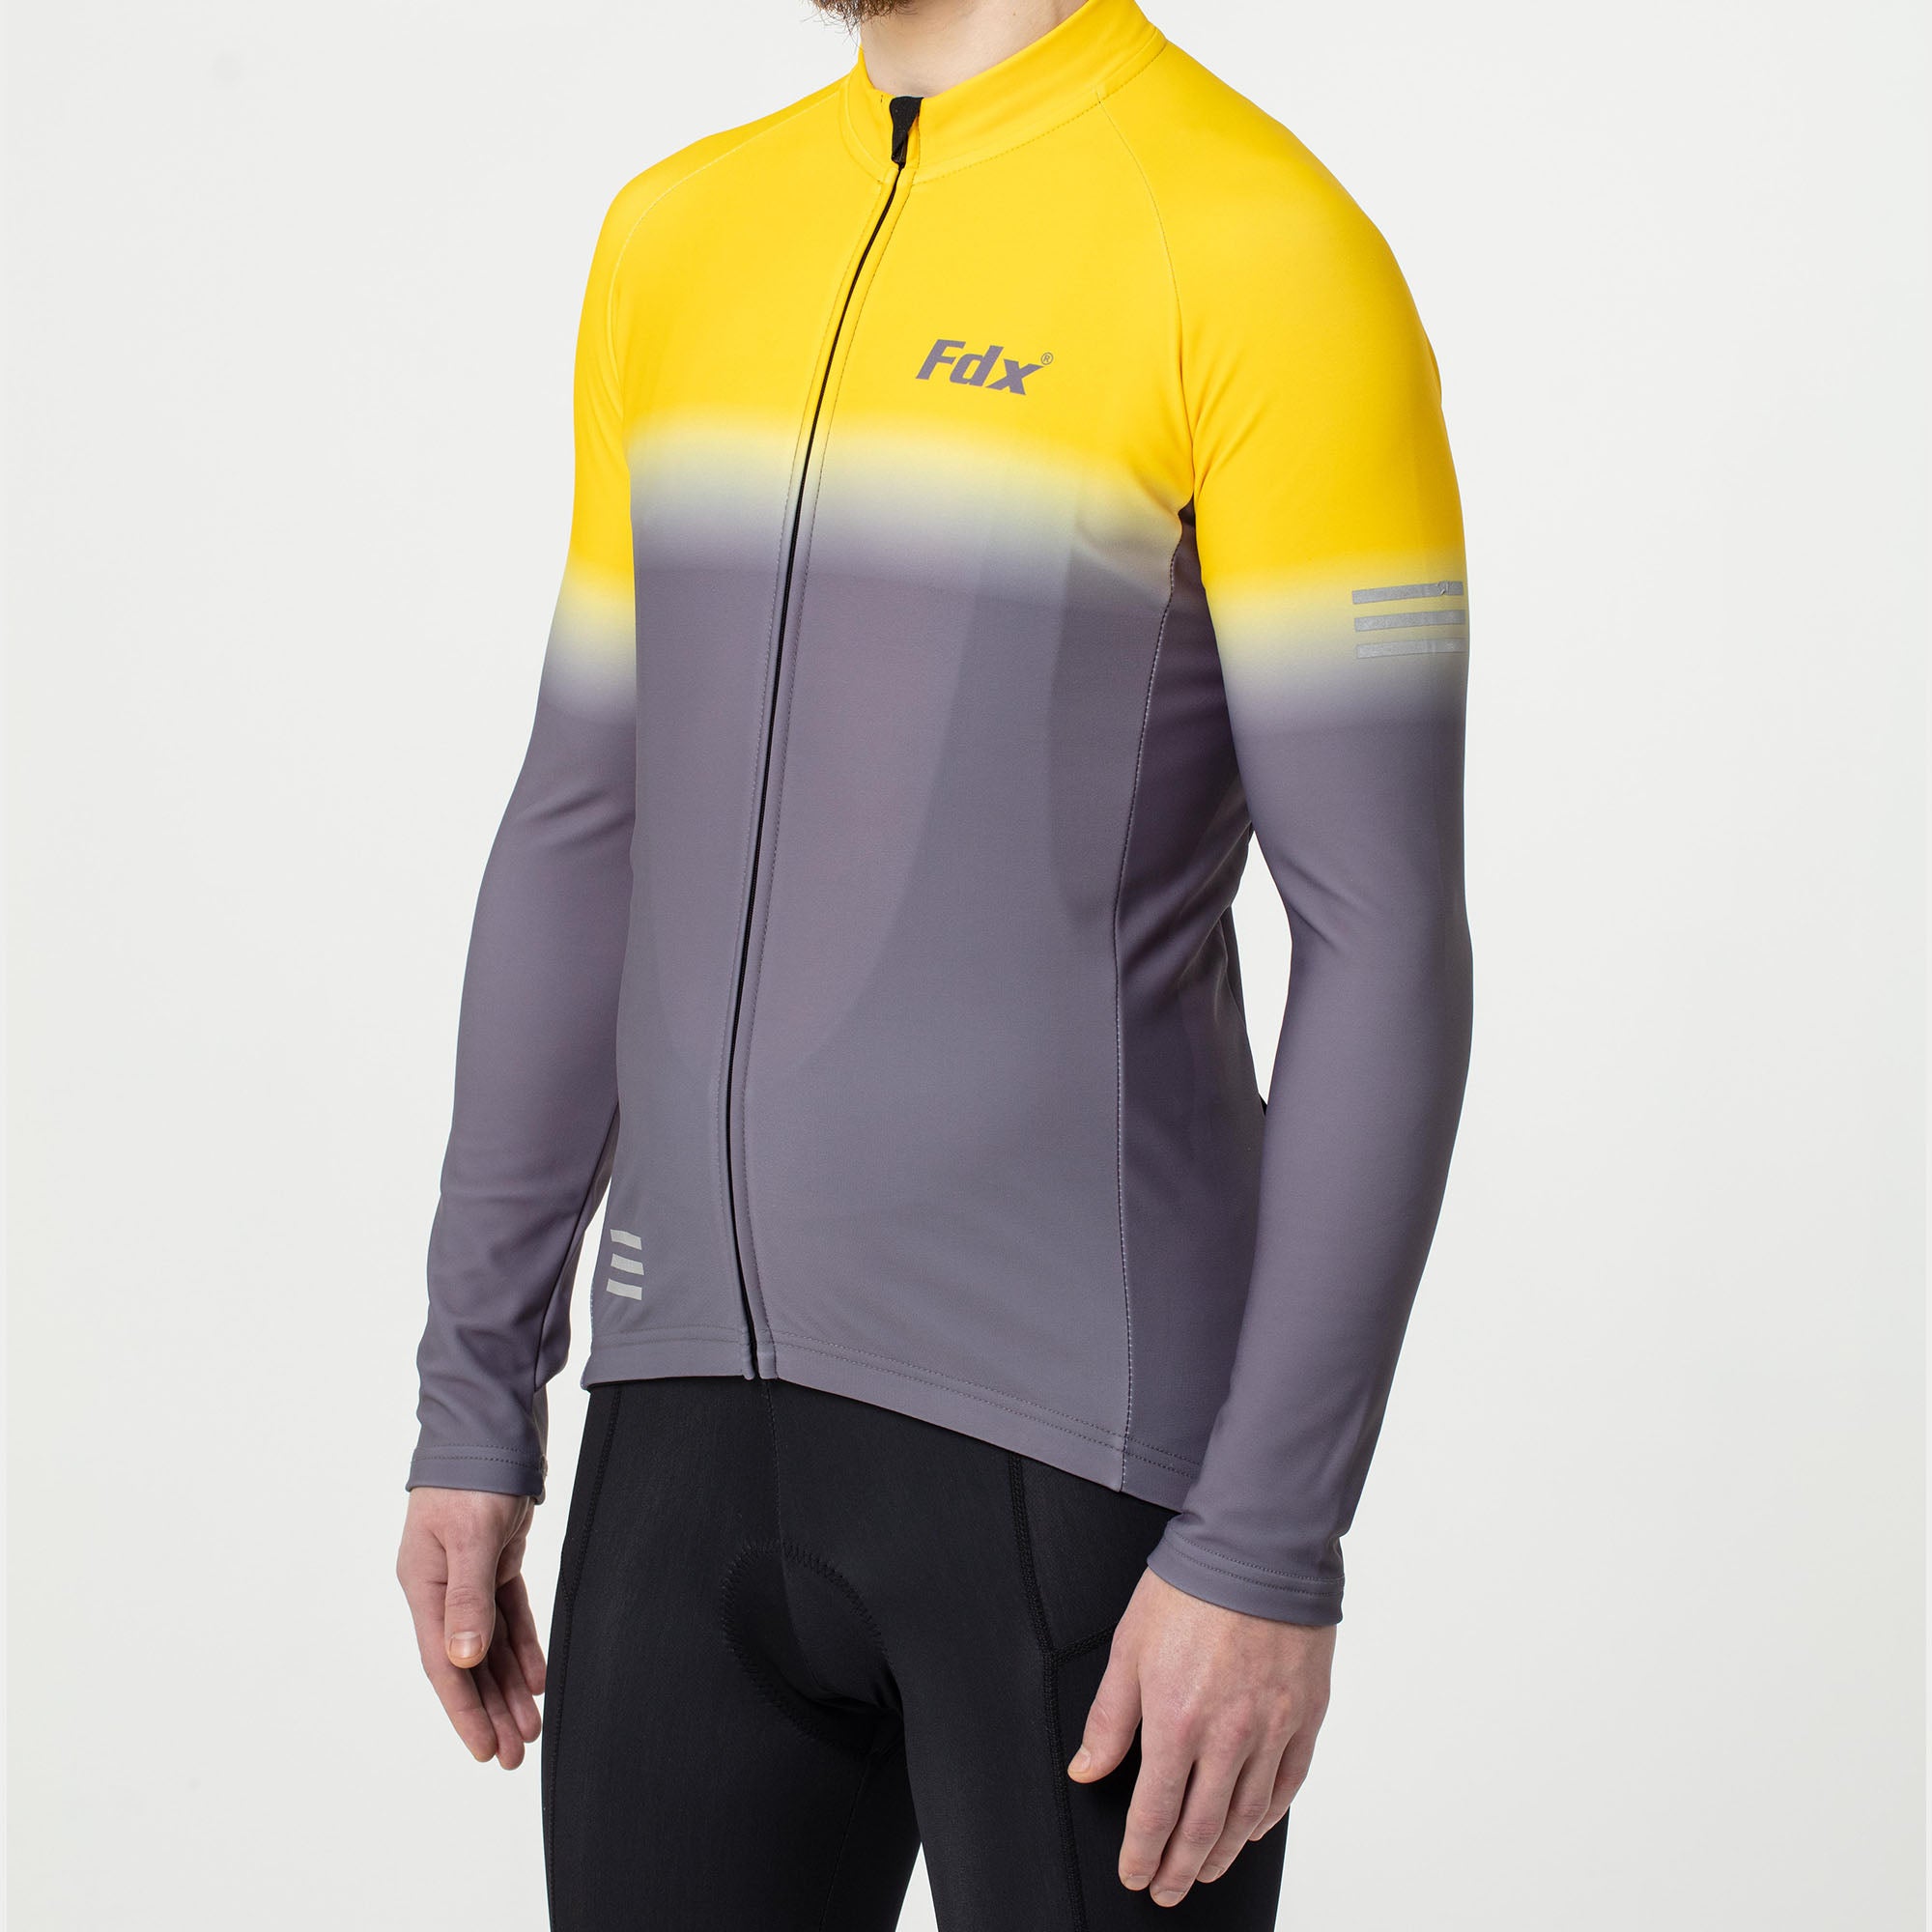 Fdx Mens Yellow & Grey Long Sleeve Cycling Jersey & Gel Padded Bib Tights Pants for Winter Roubaix Thermal Fleece Road Bike Wear Windproof, Hi-viz Reflectors & Pockets - Duo